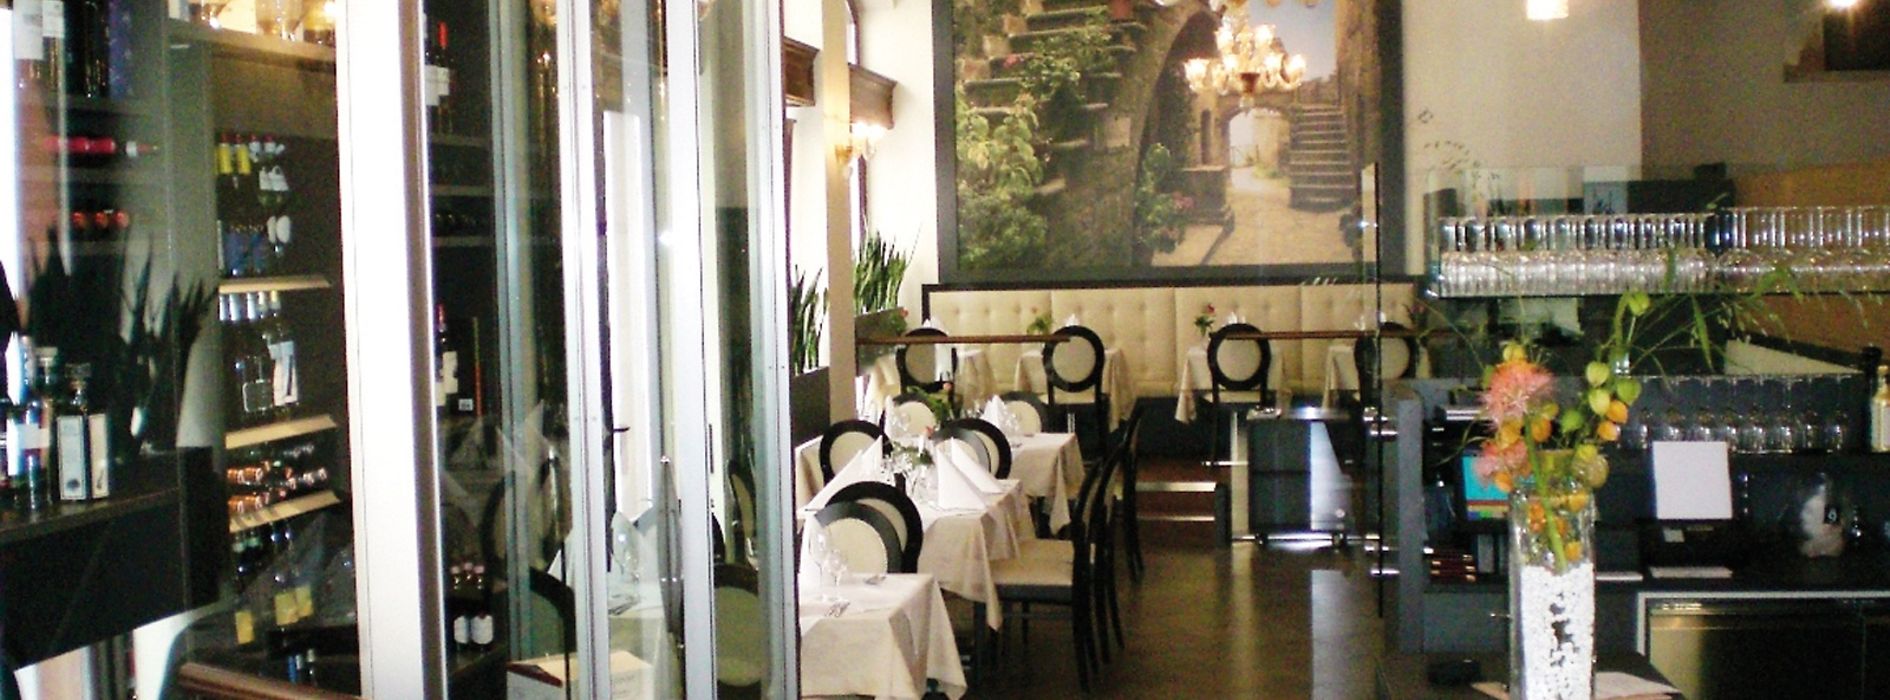 Restaurant Al Borgo 